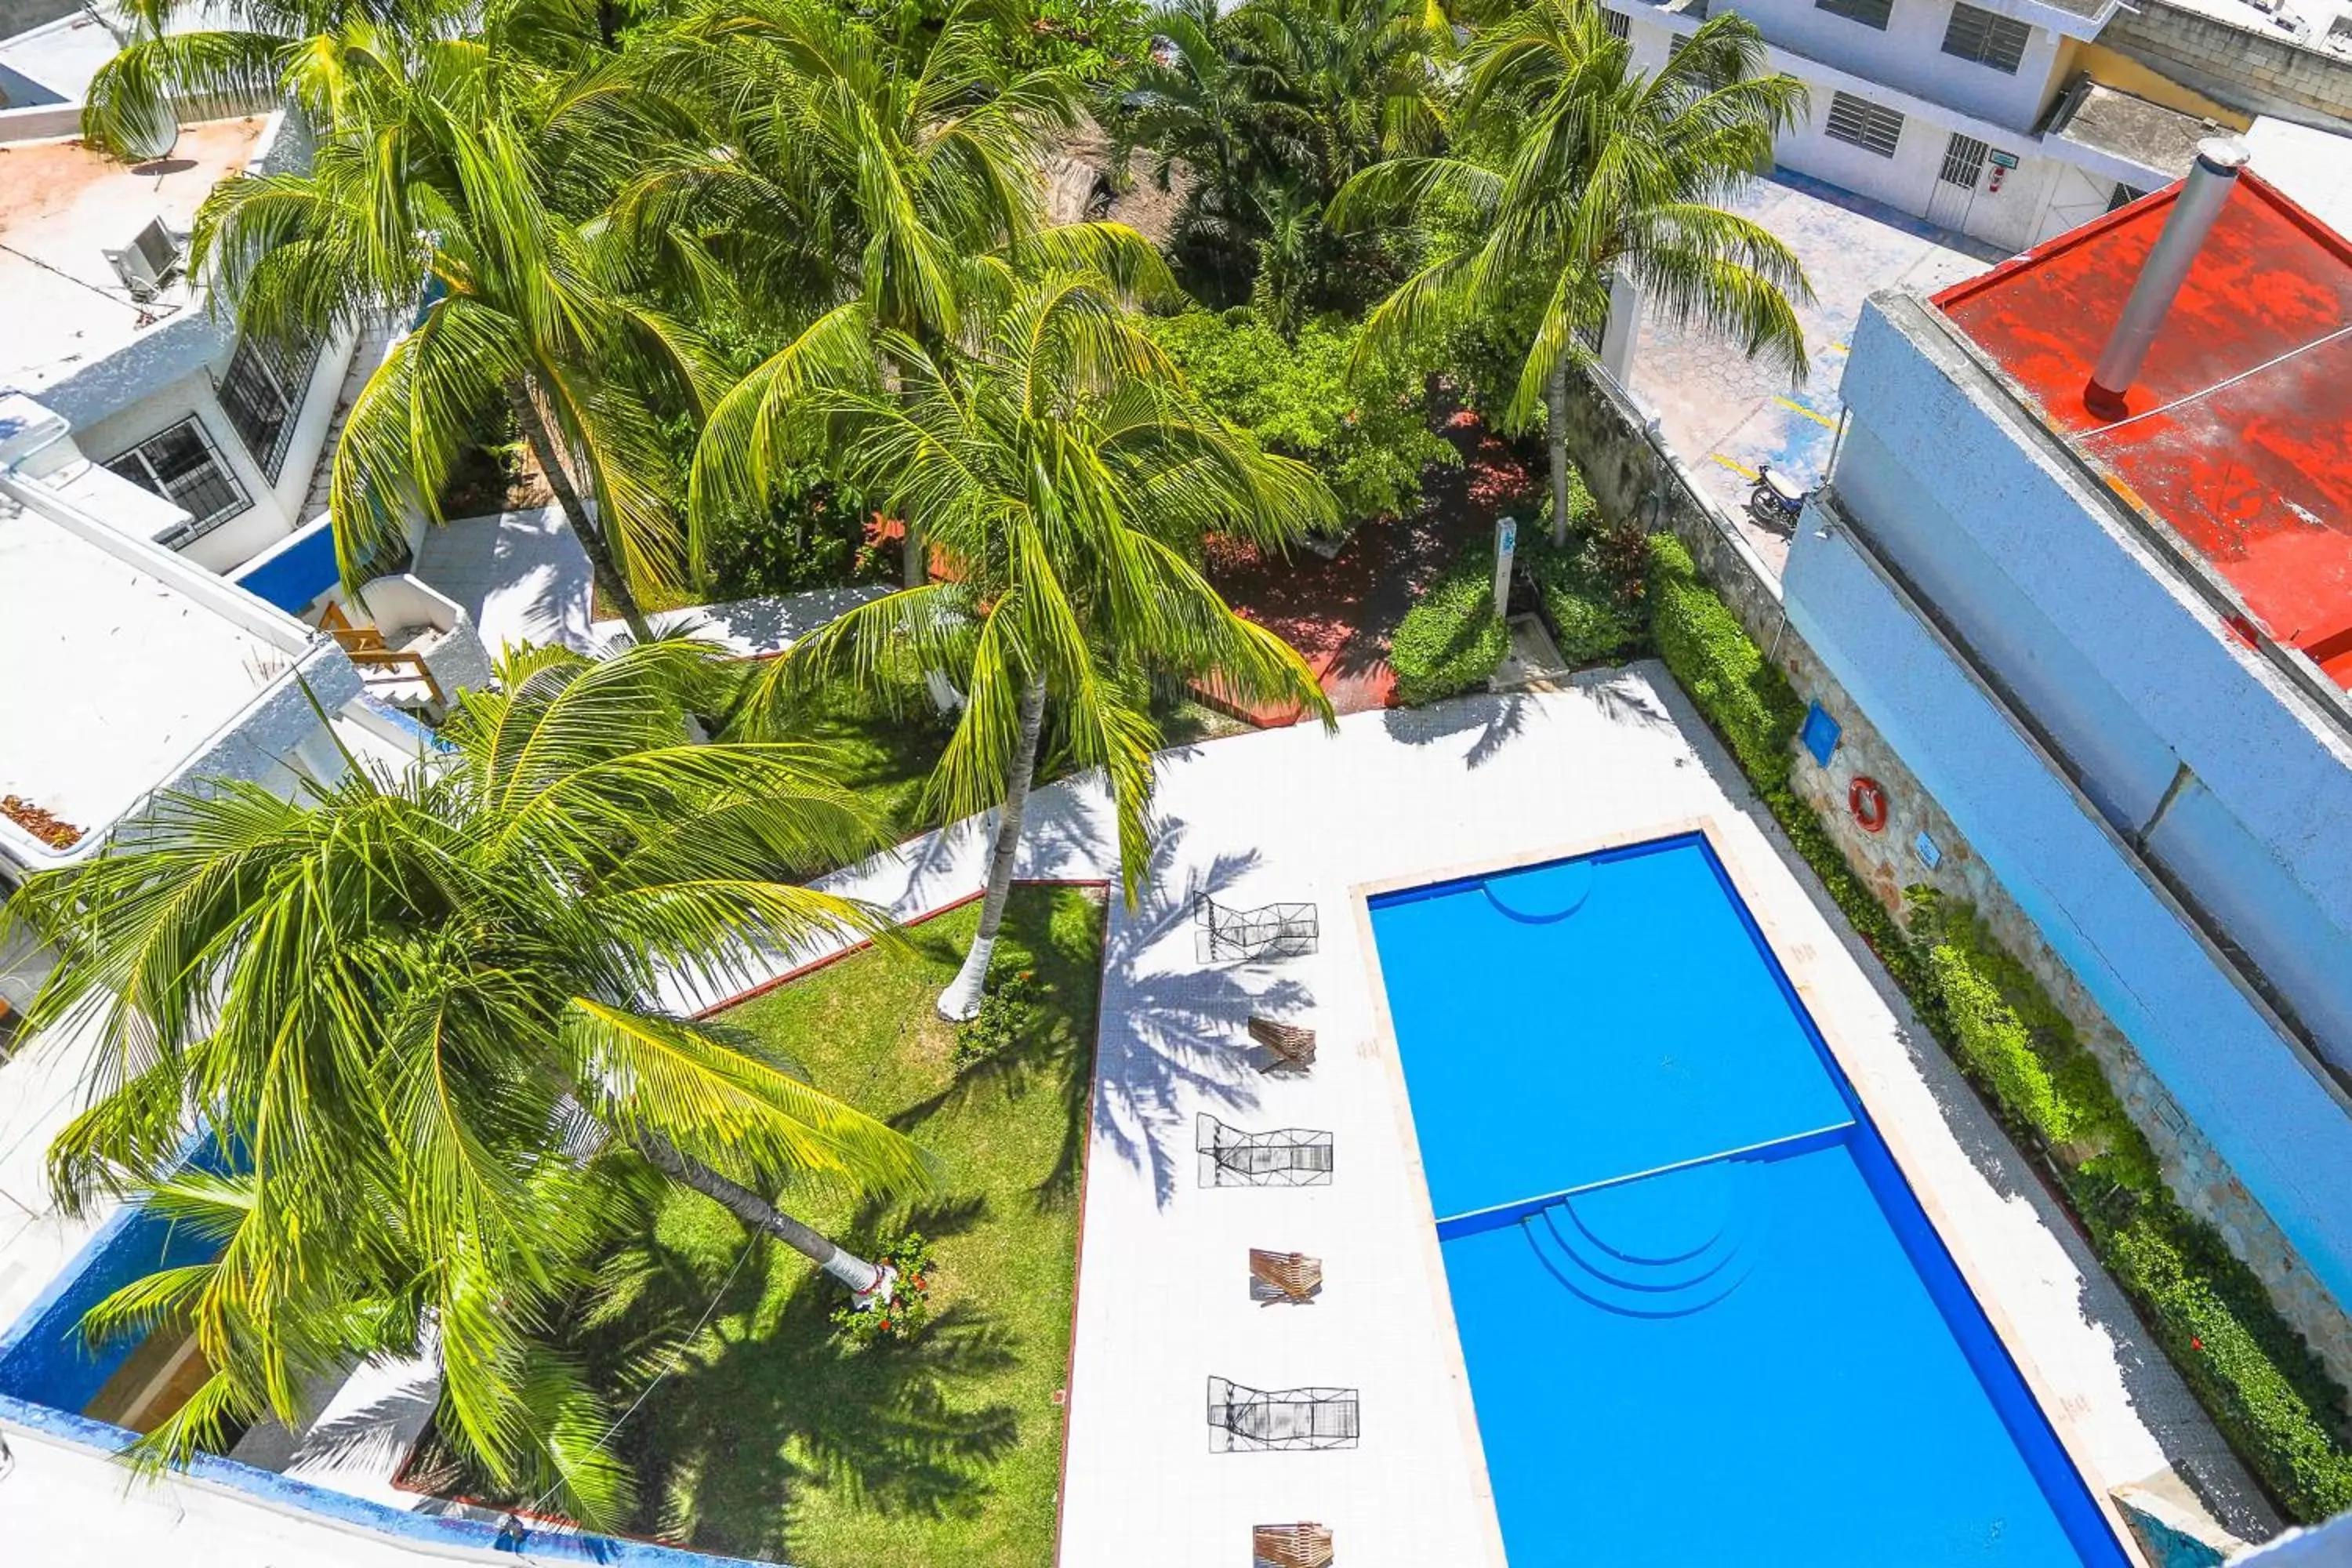 Garden view, Pool View in Hotel Caribe Internacional Cancun